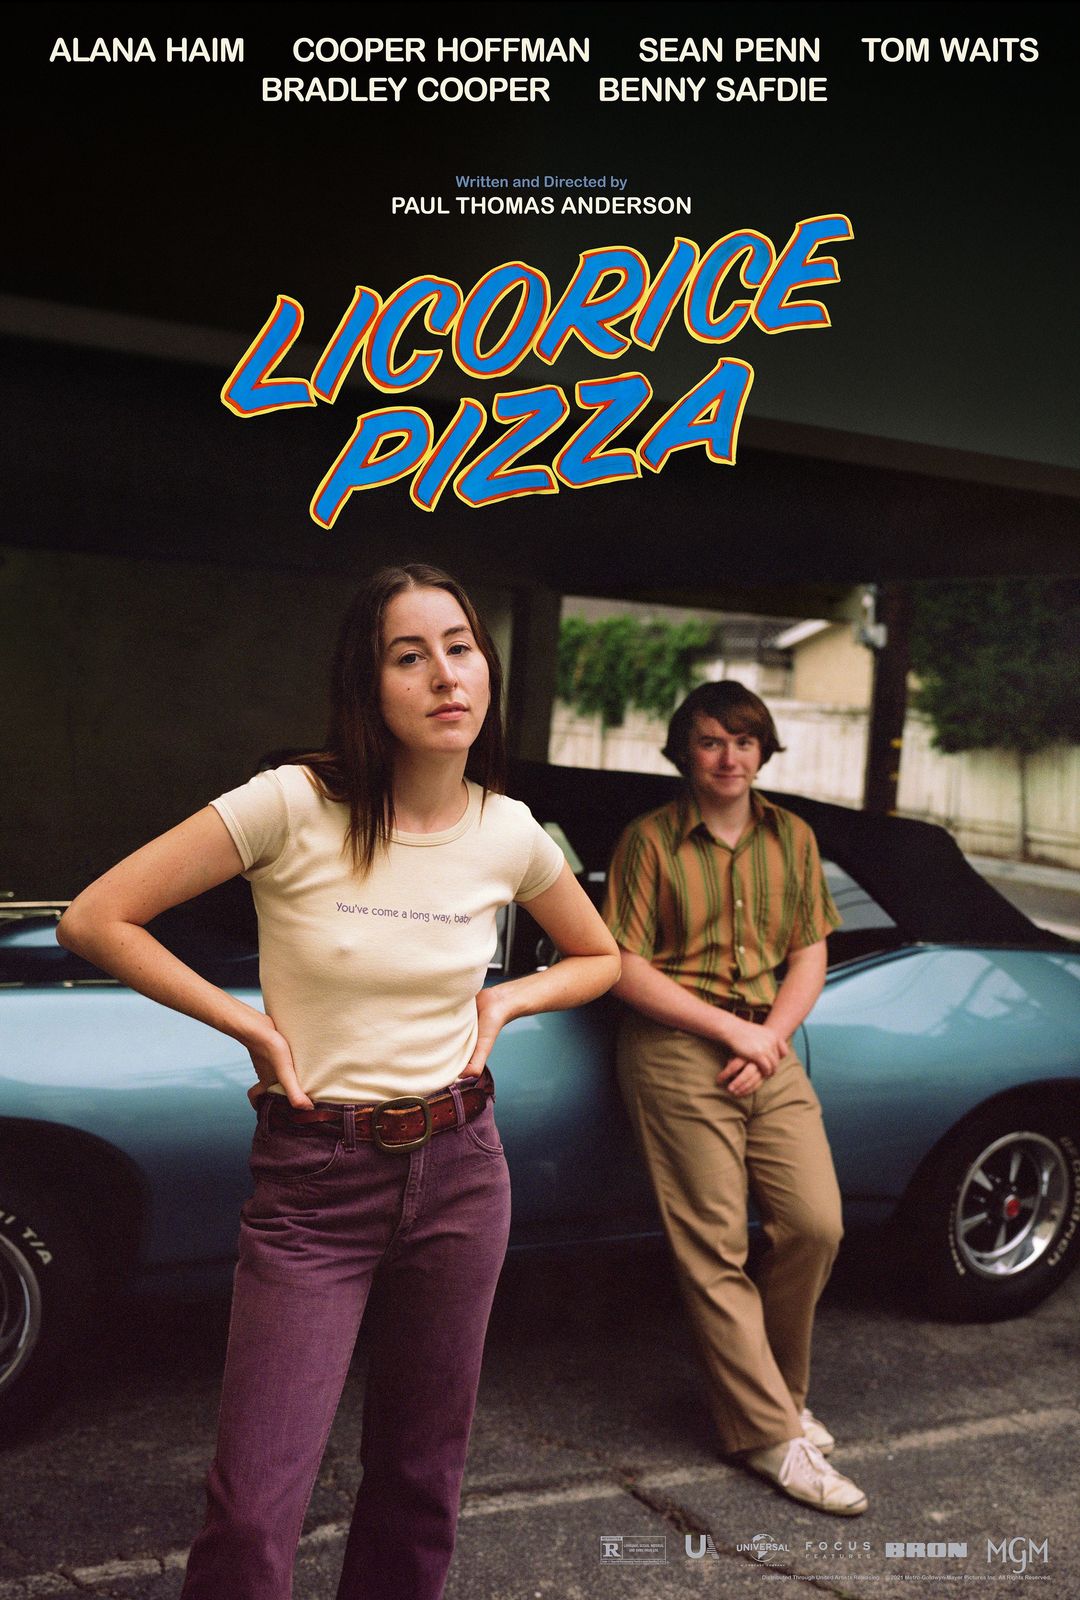 Licorice Pizza Poster Paul Thomas Anderson Movie Art Film Print Size 24x36 27x40